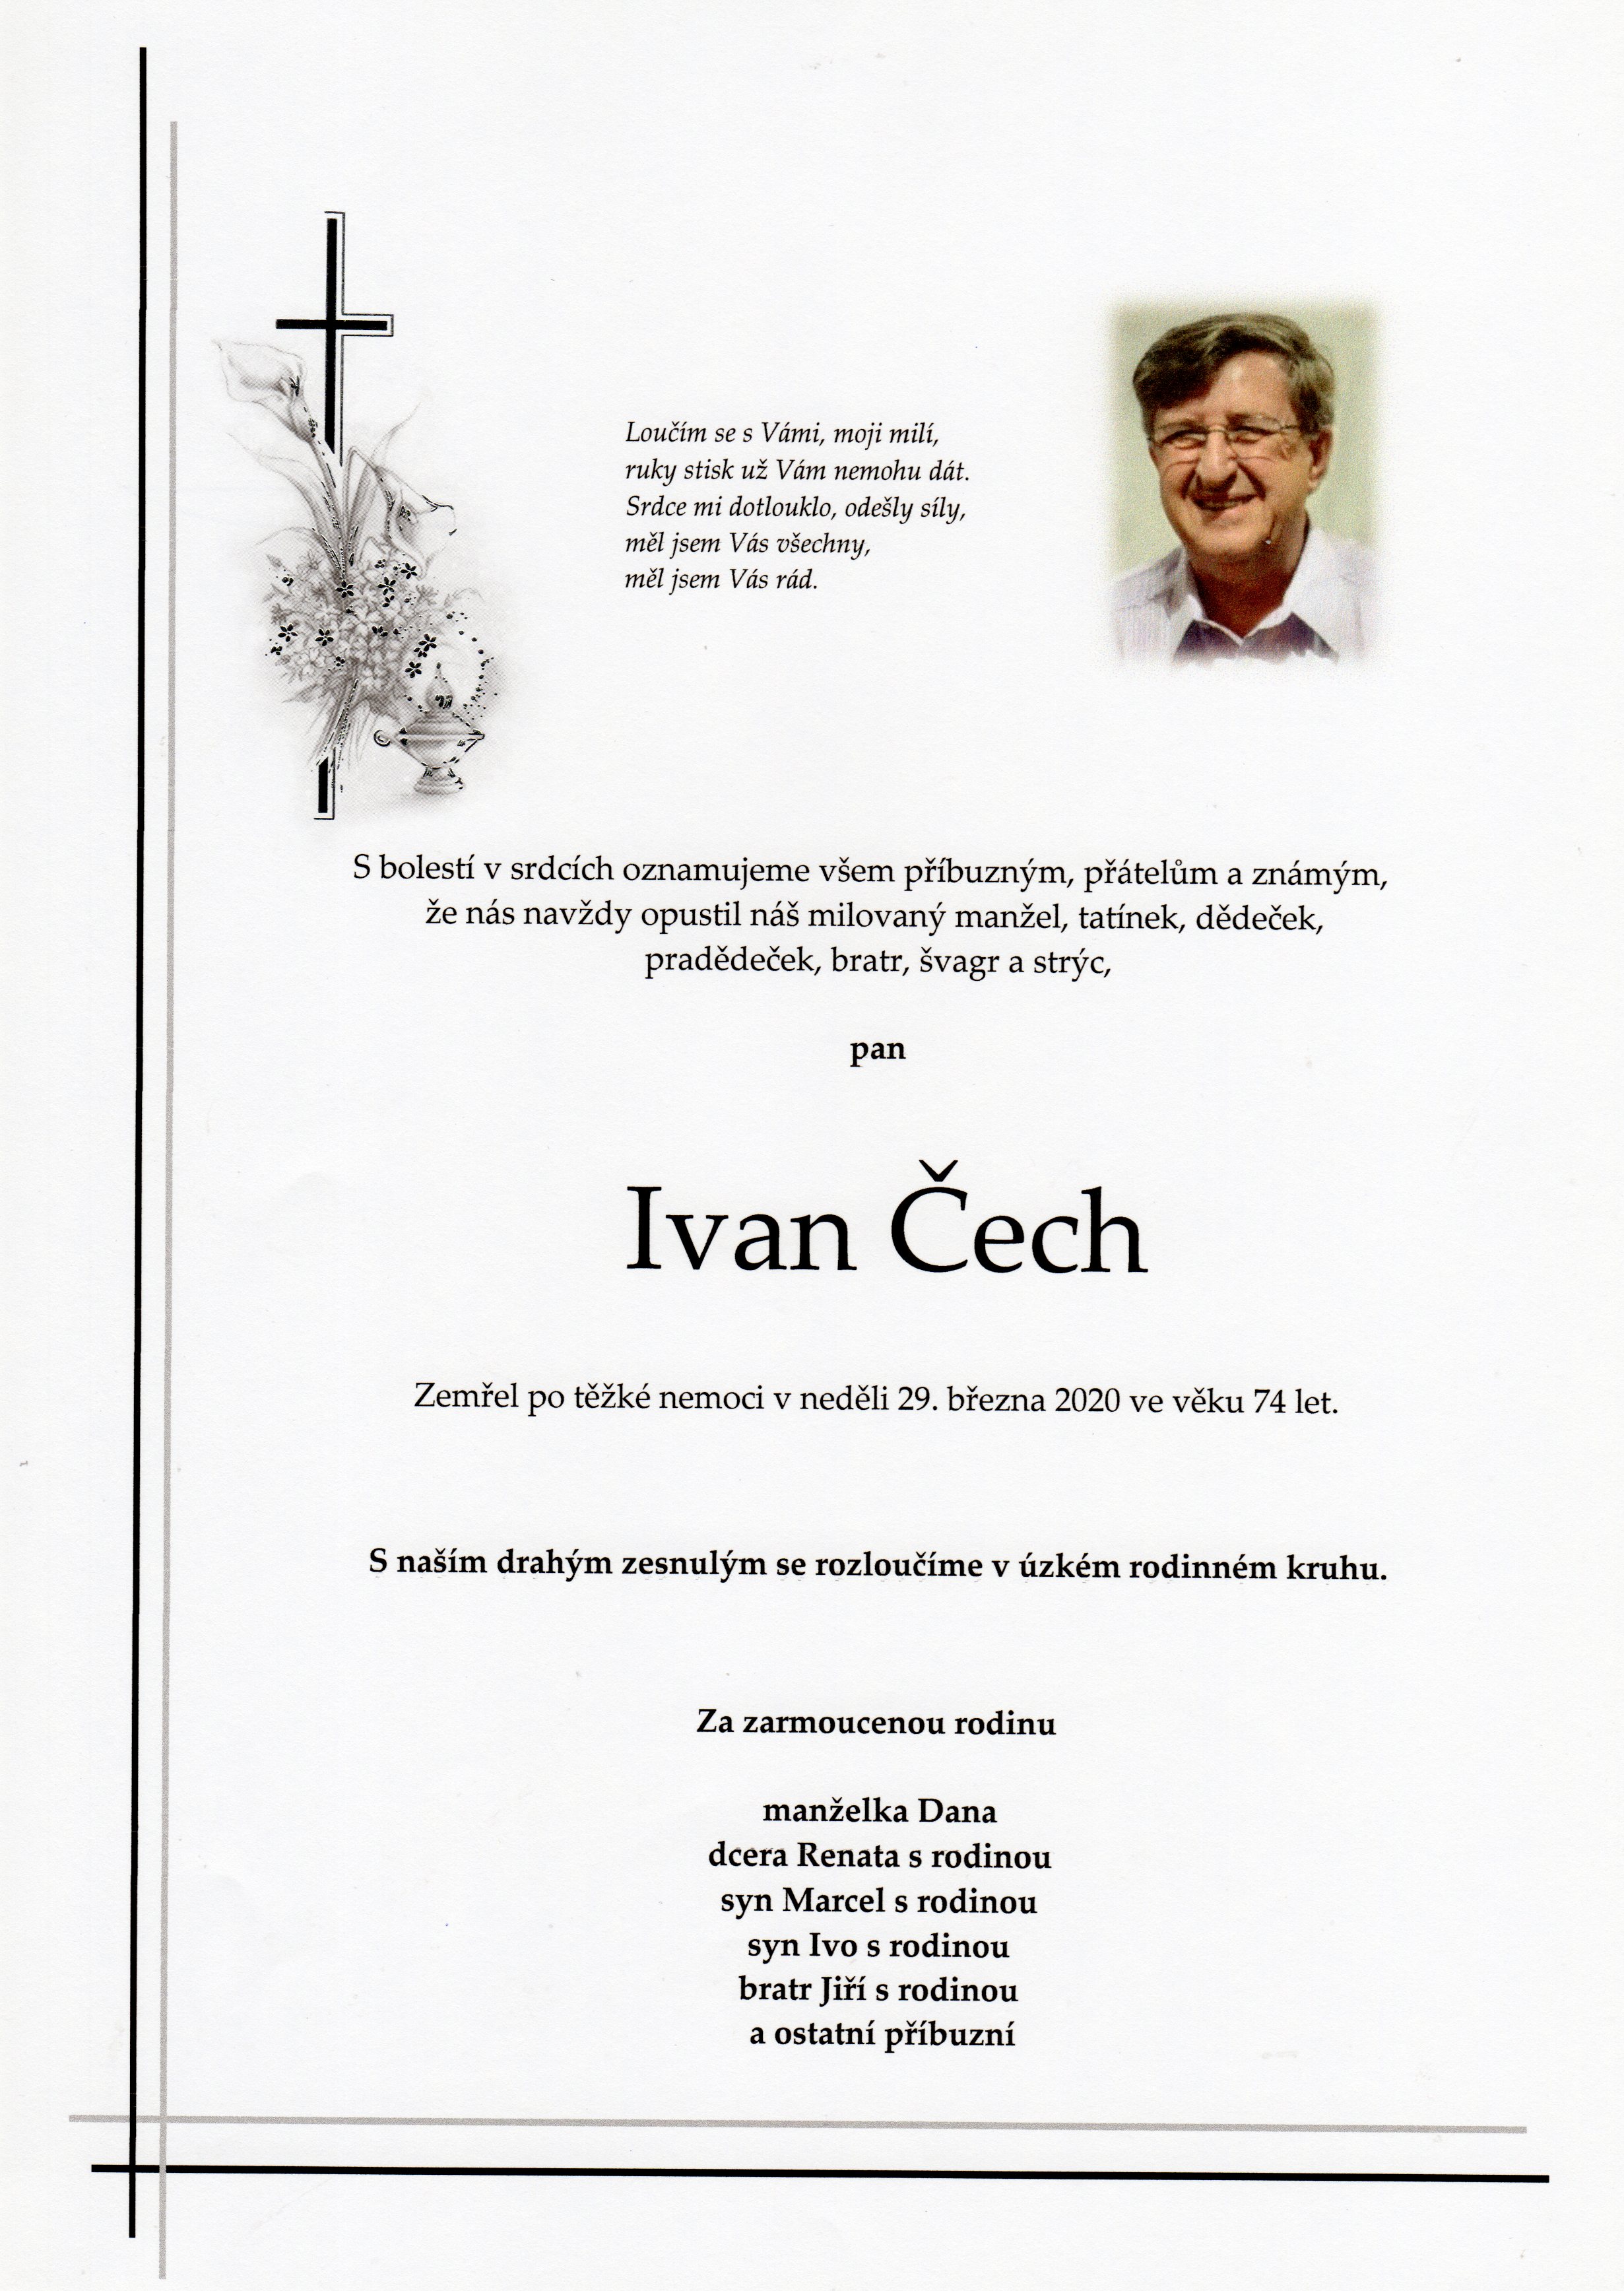 Ivan Čech